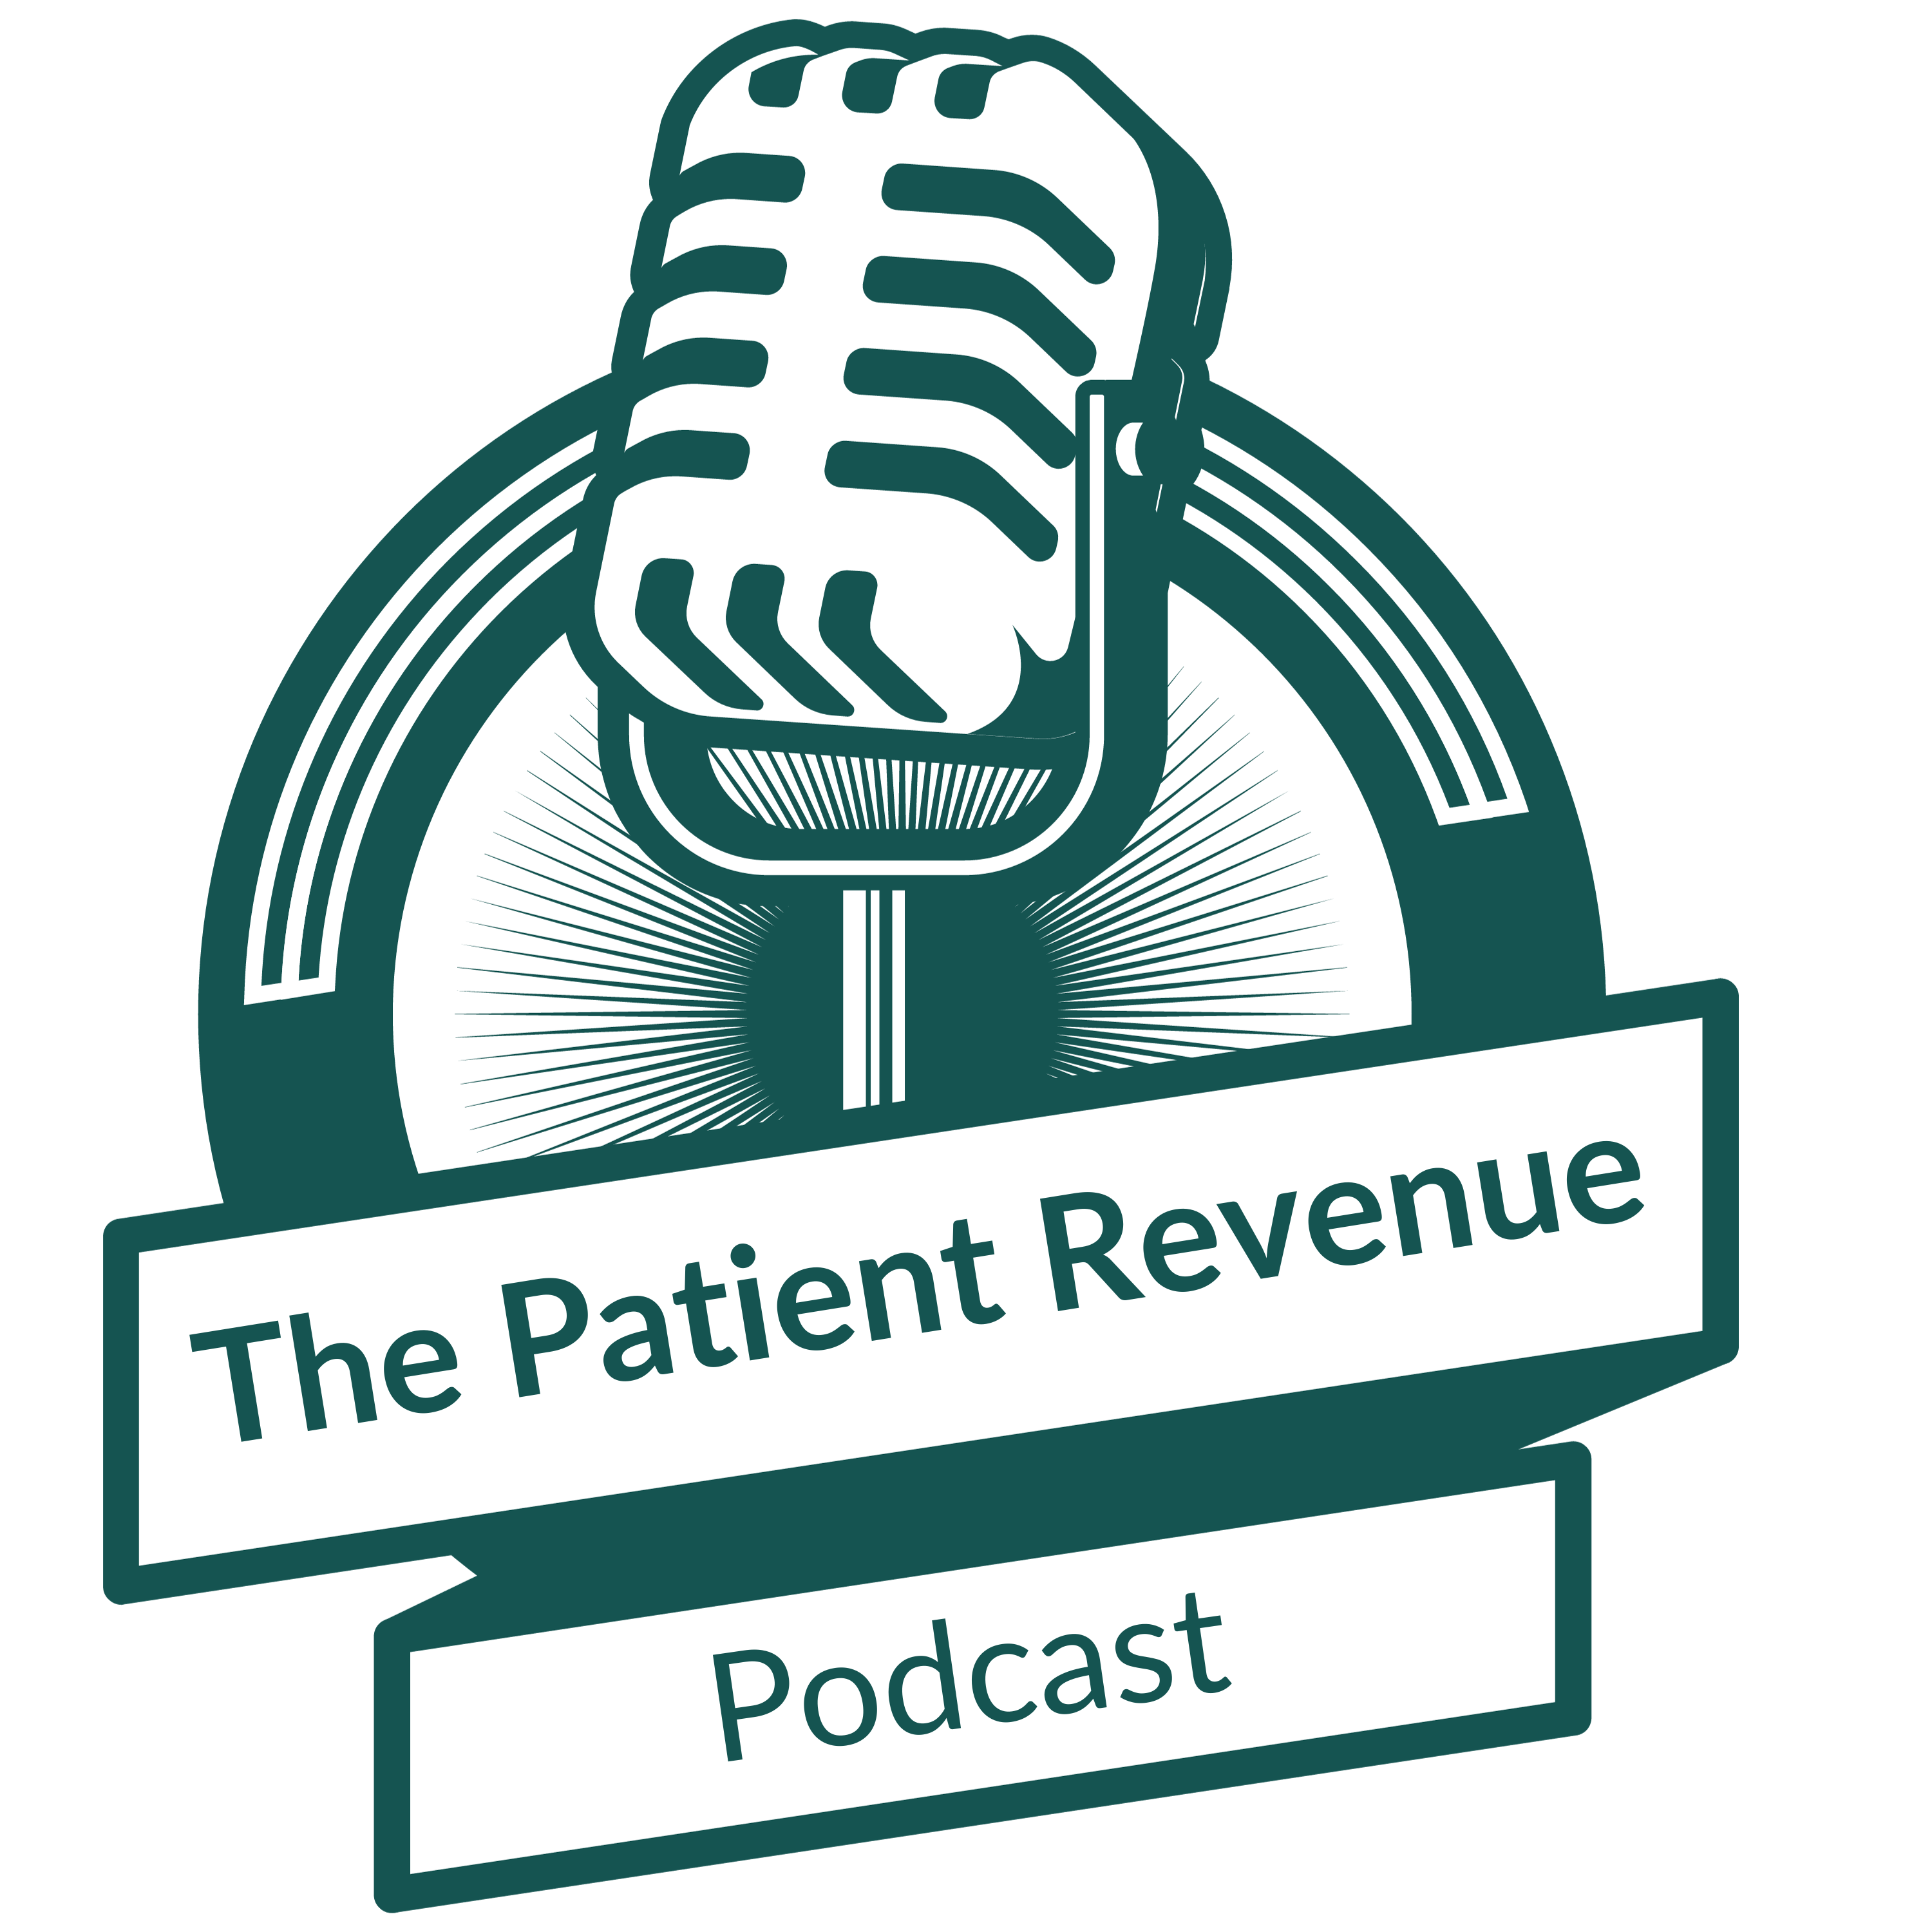 The Patient Revenue Podcast Hero Image (3000 × 3000 px) (1)